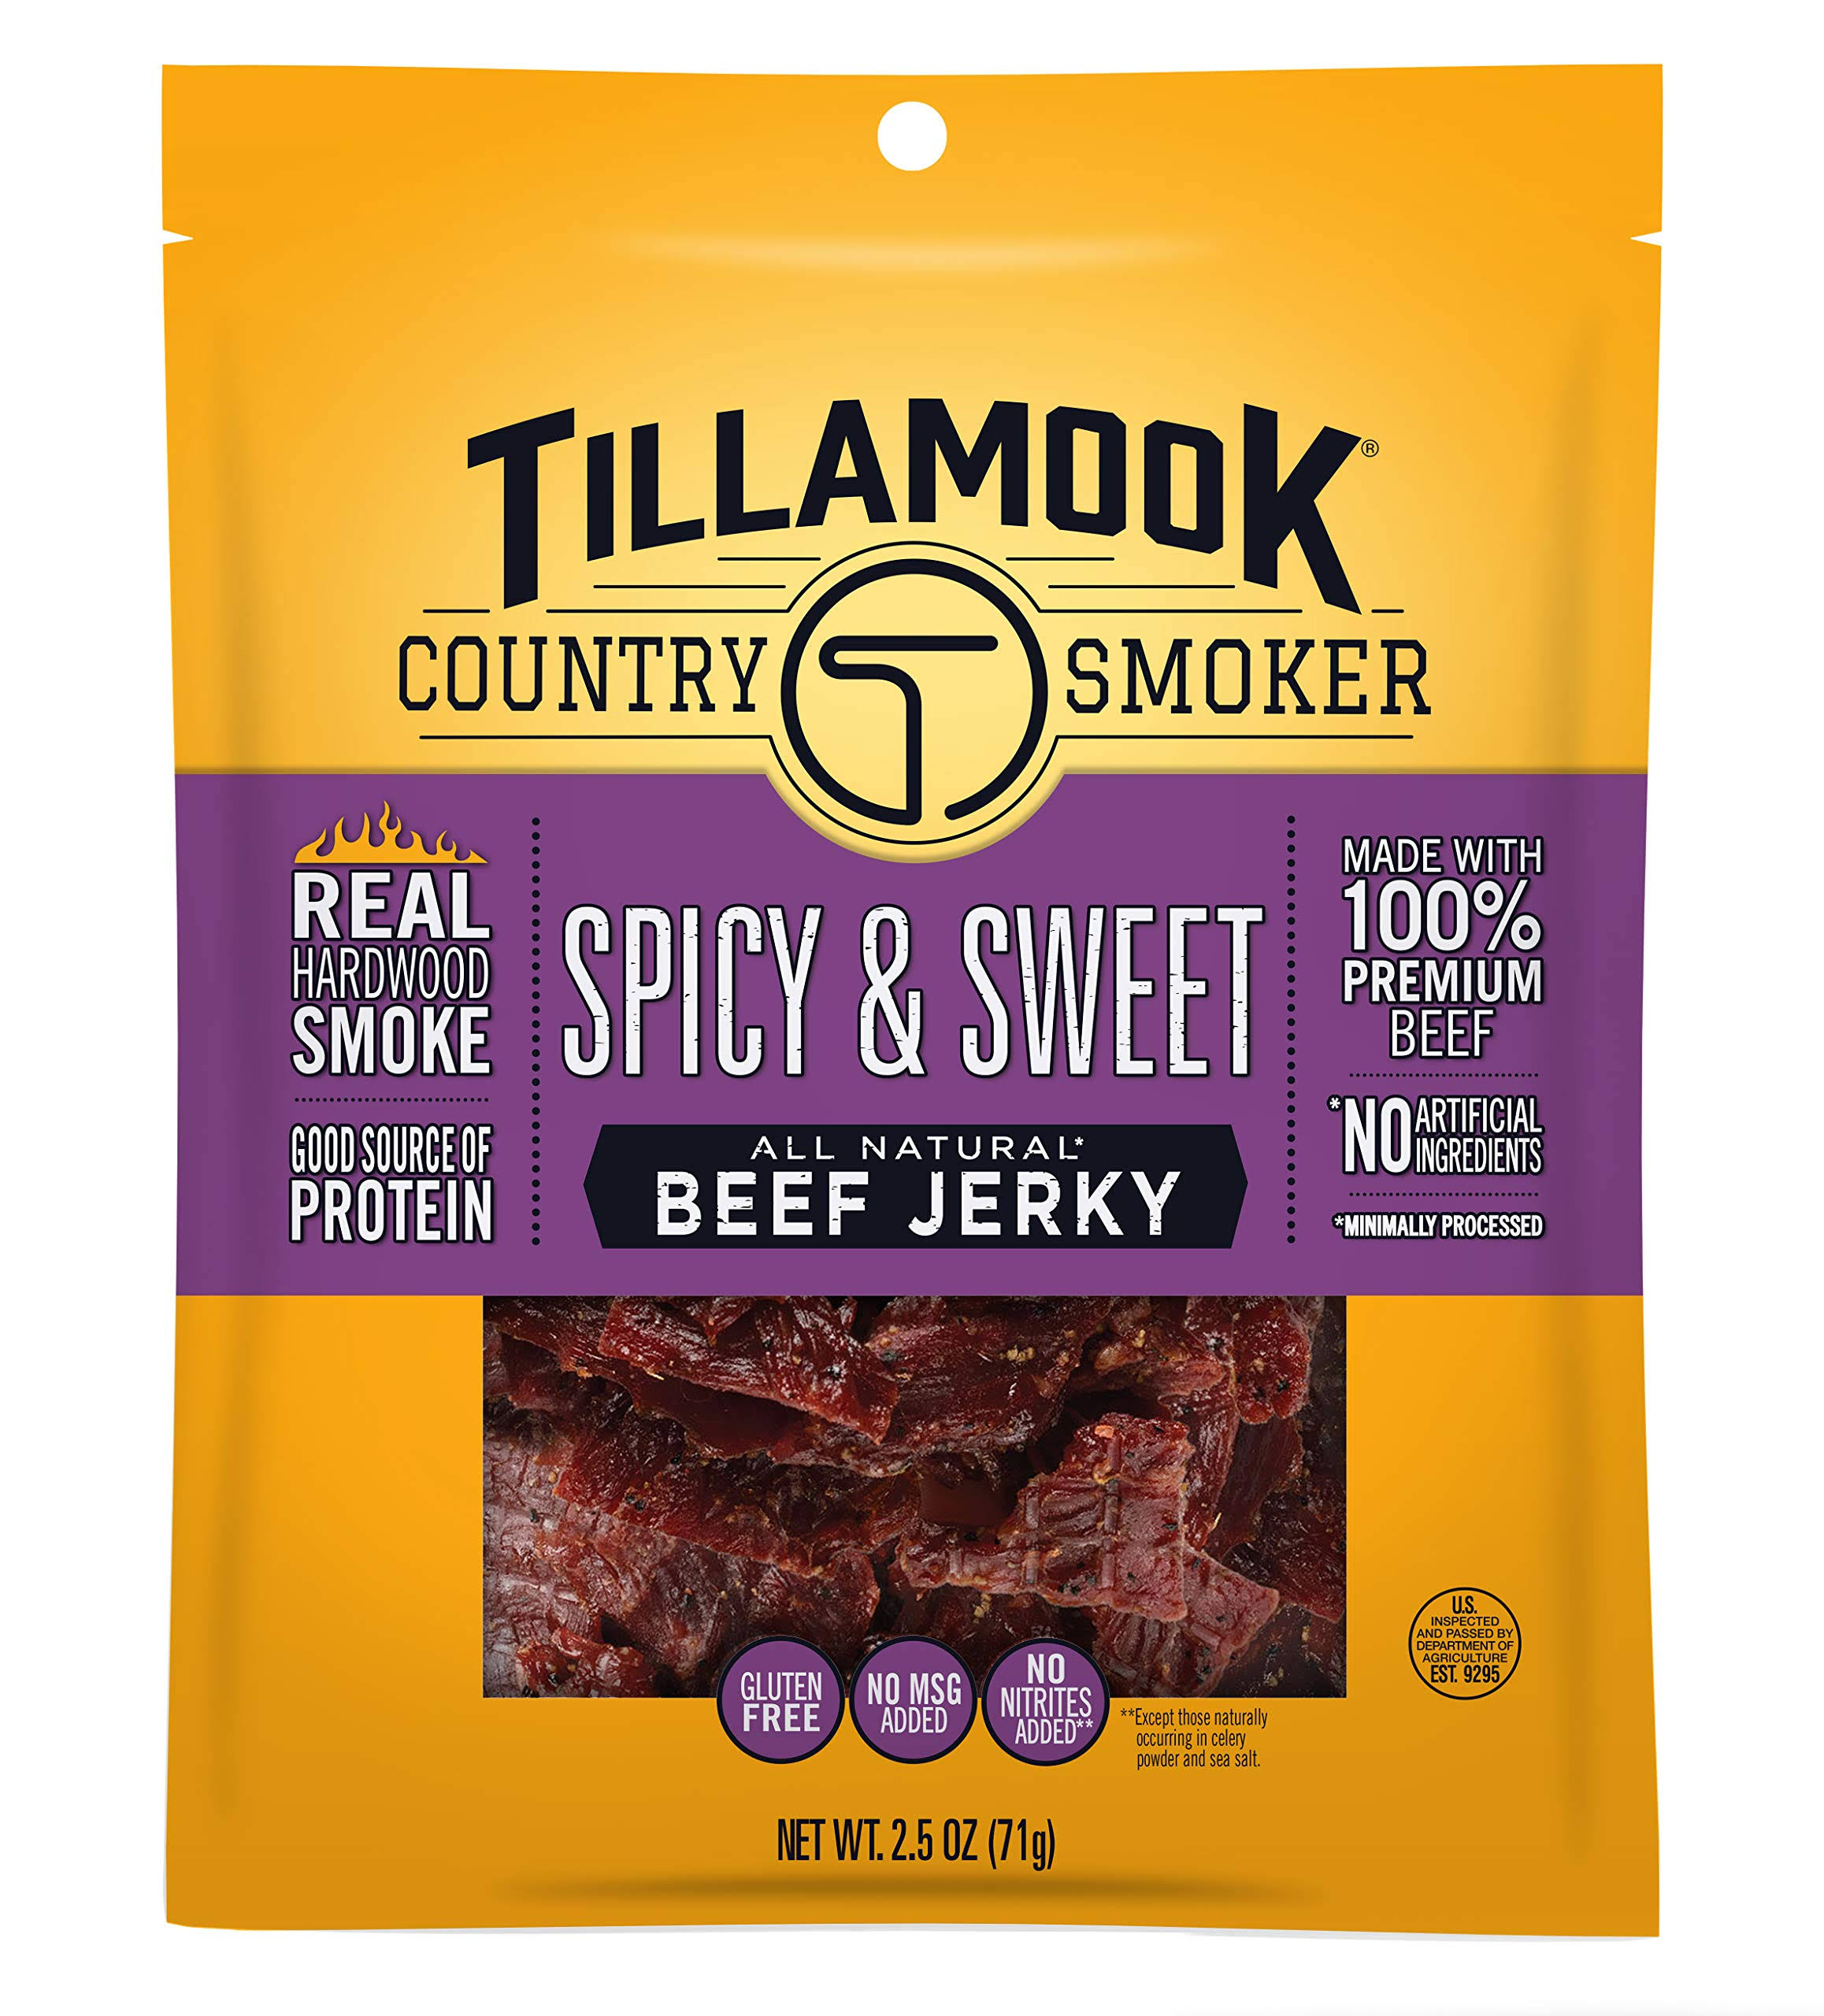 Tillamook Country Smoker Beef Jerky, Spicy & Sweet - 2.5 oz